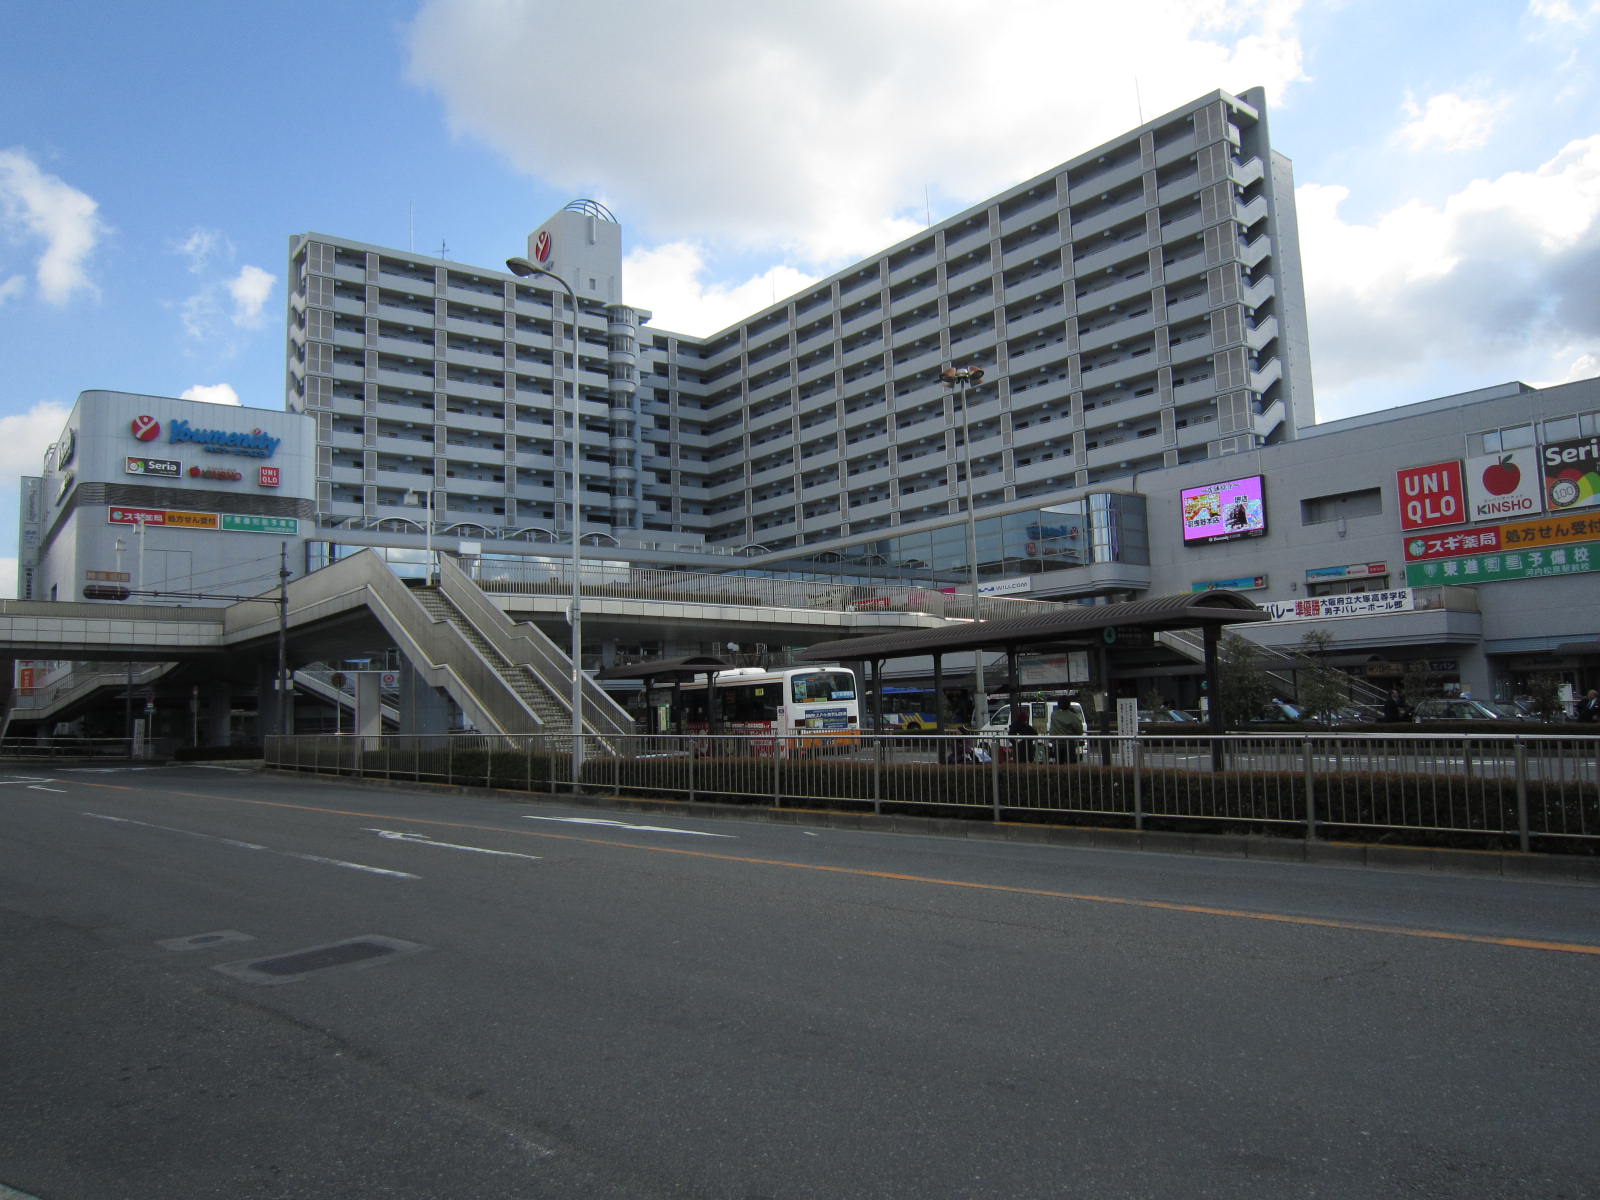 Shopping centre. Dream 1017m until sanity Matsubara (shopping center)